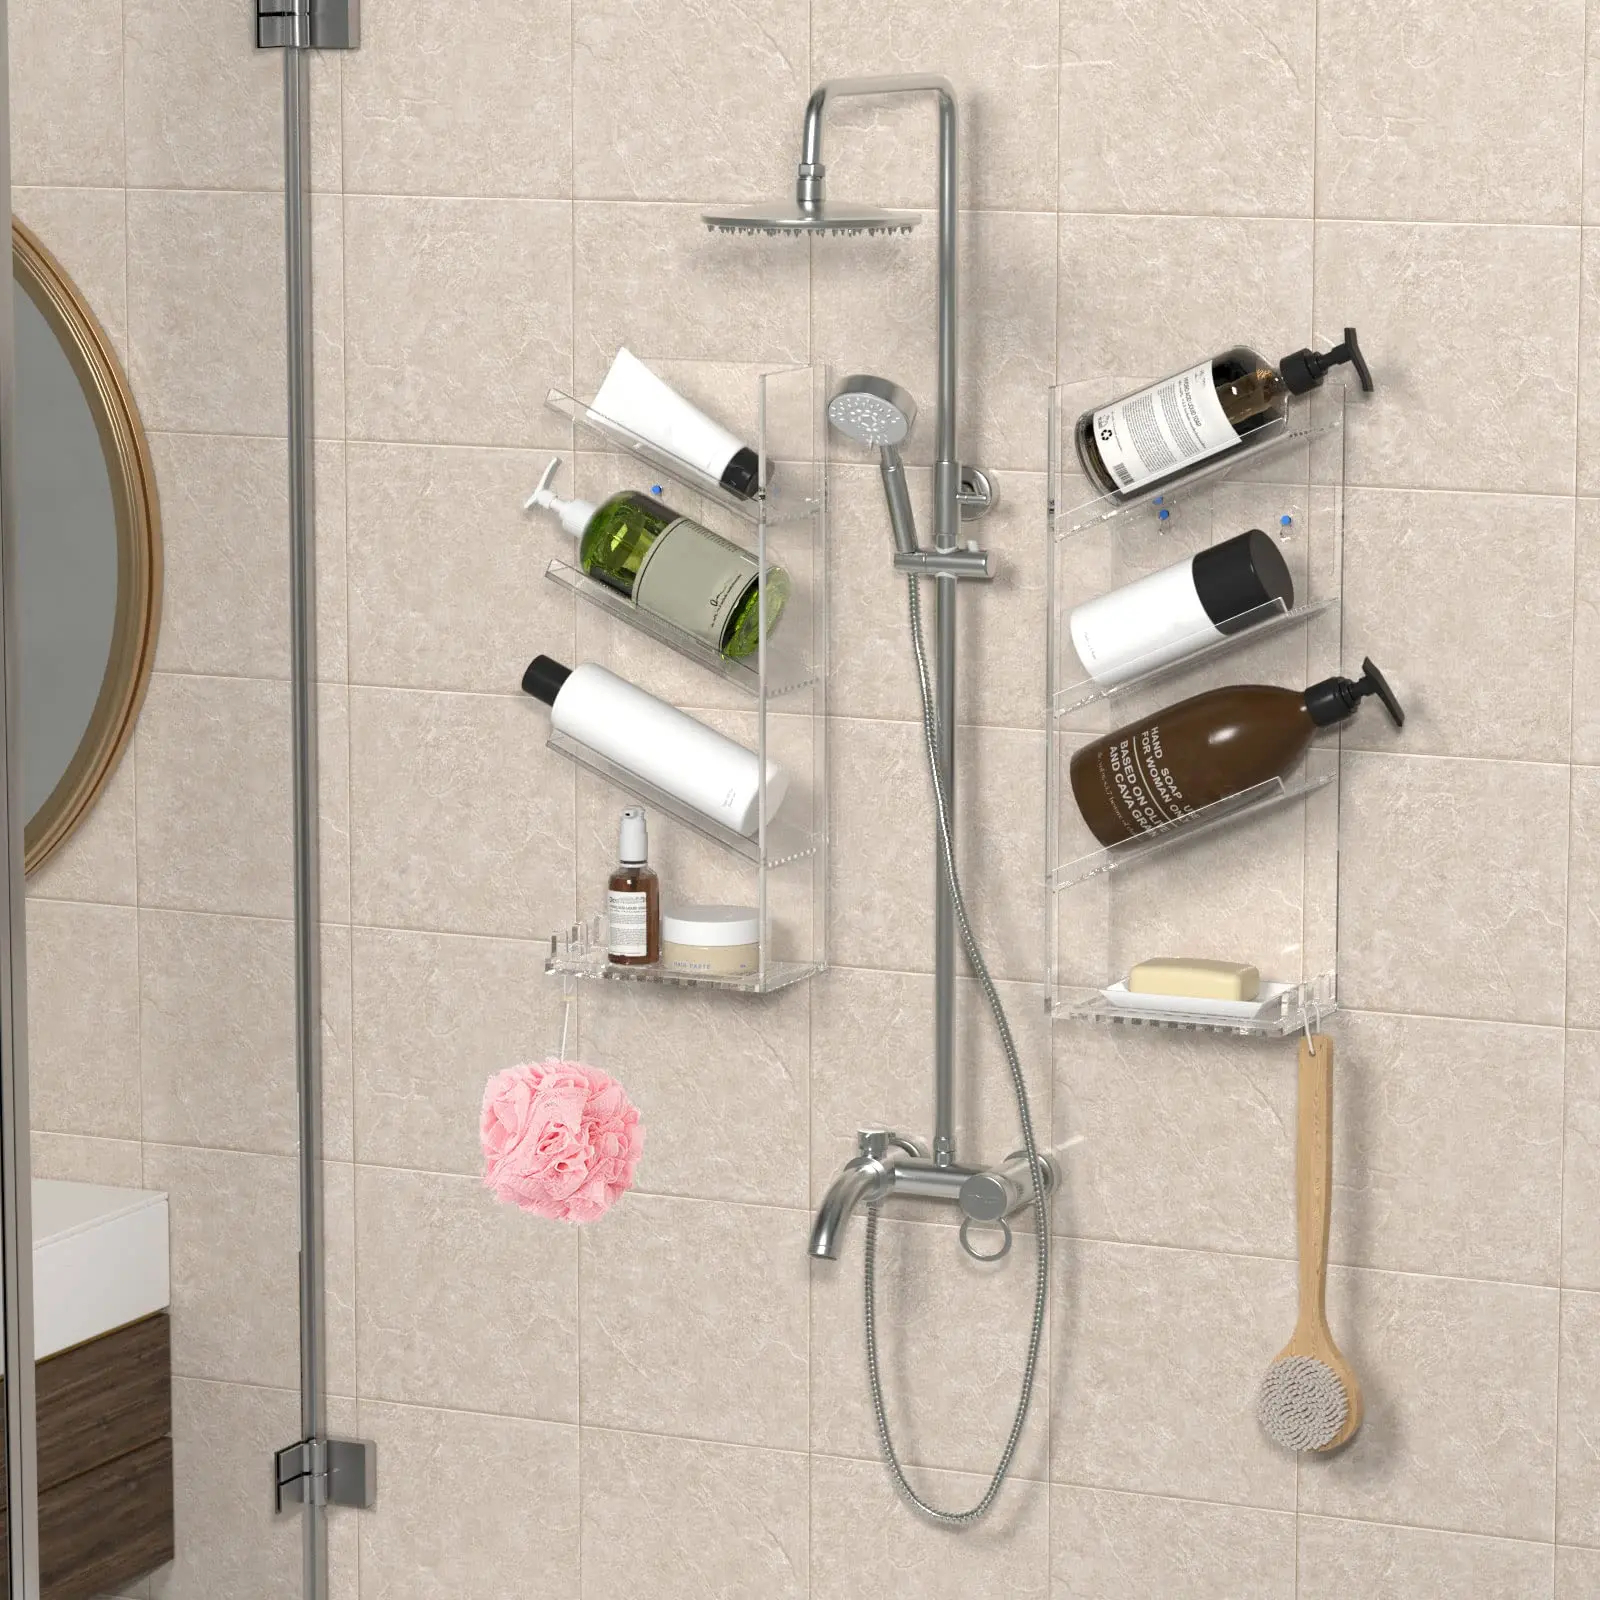 Acrylic Shower Caddy Shelf, Traceless Adhesive Wall Mounted, Floating  Acrylic Bathroom Shelves with Hooks for Razor - AliExpress